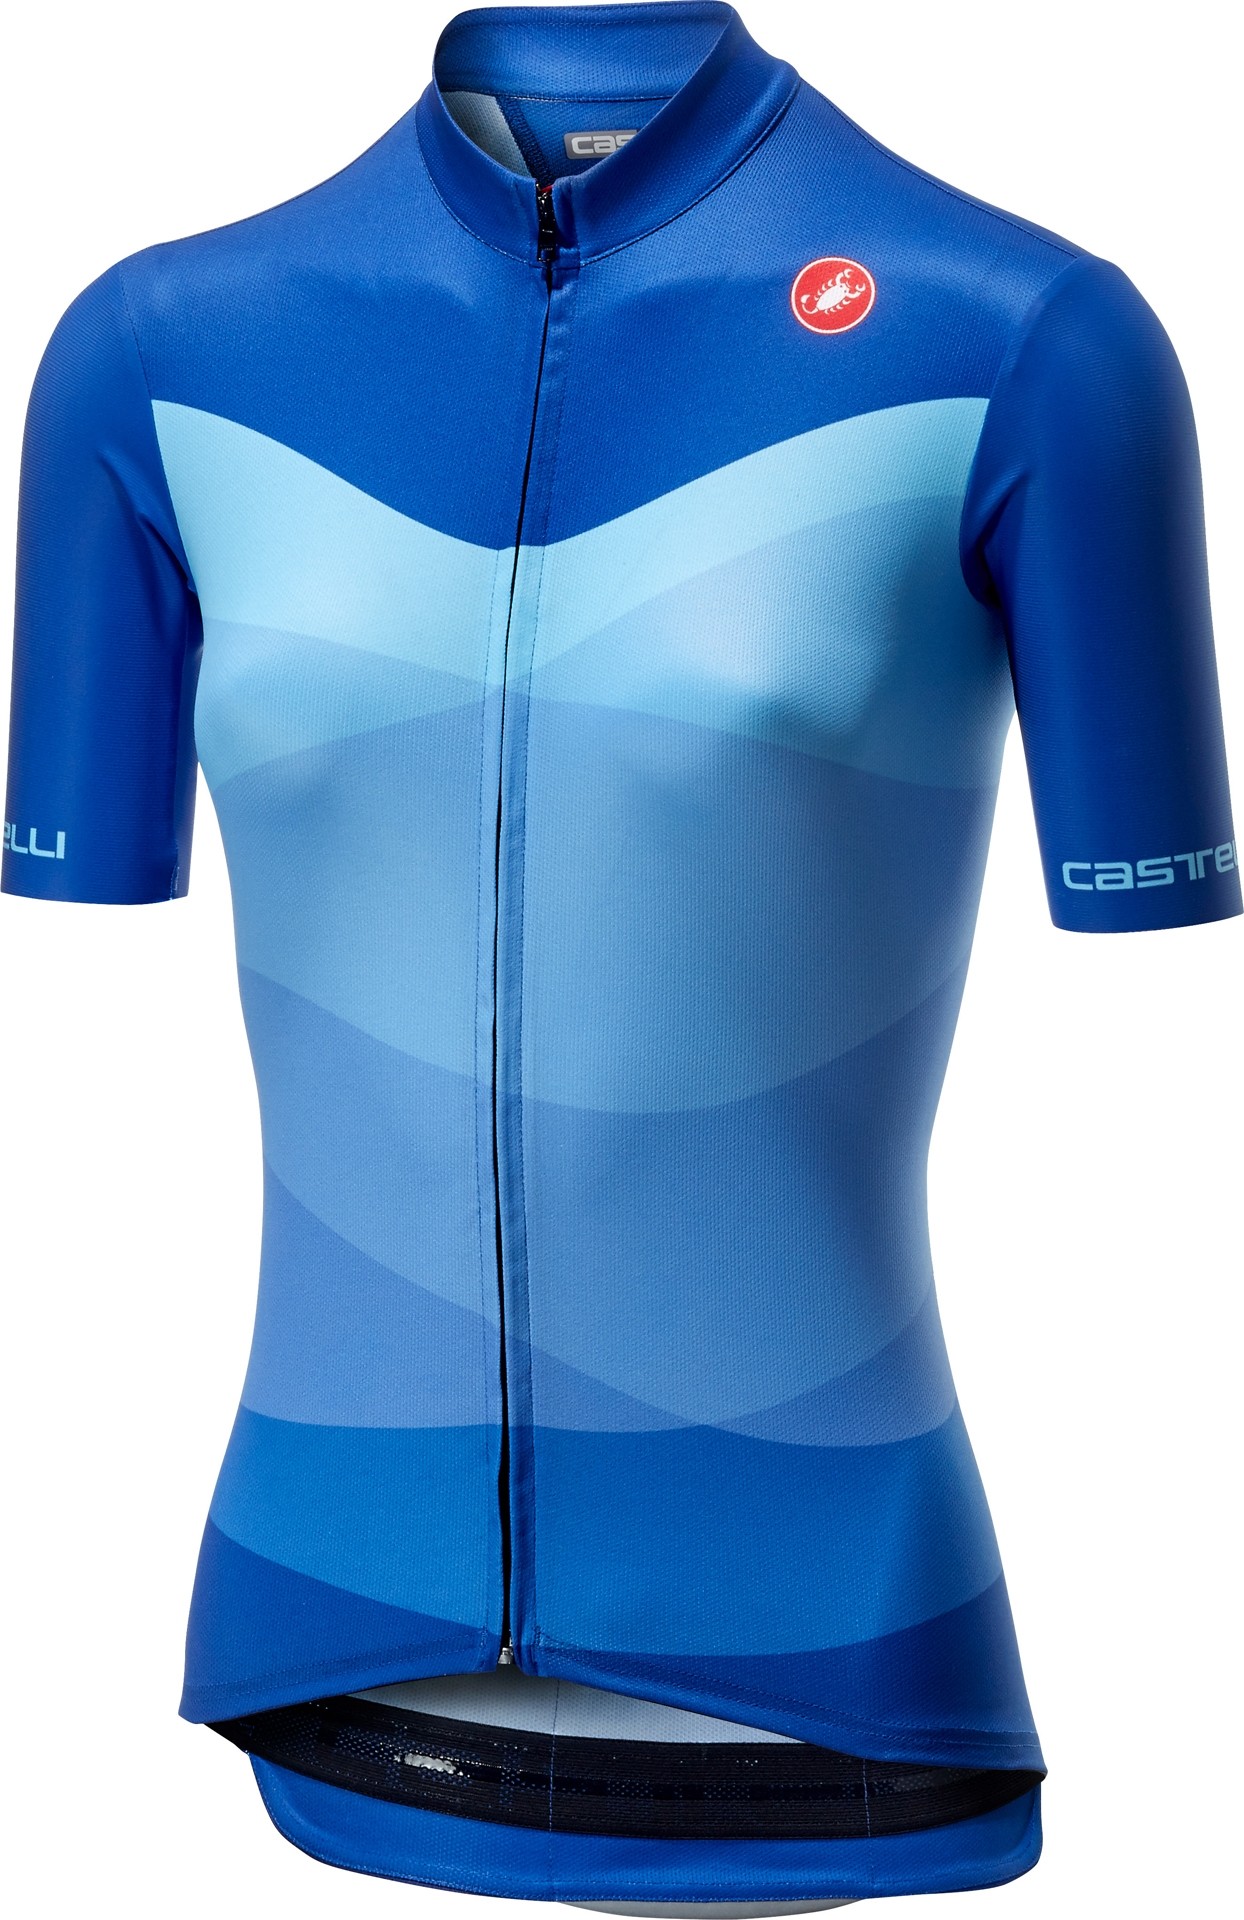 Castelli tabula rasa maillot de cyclisme manches courtes femme onda bleu